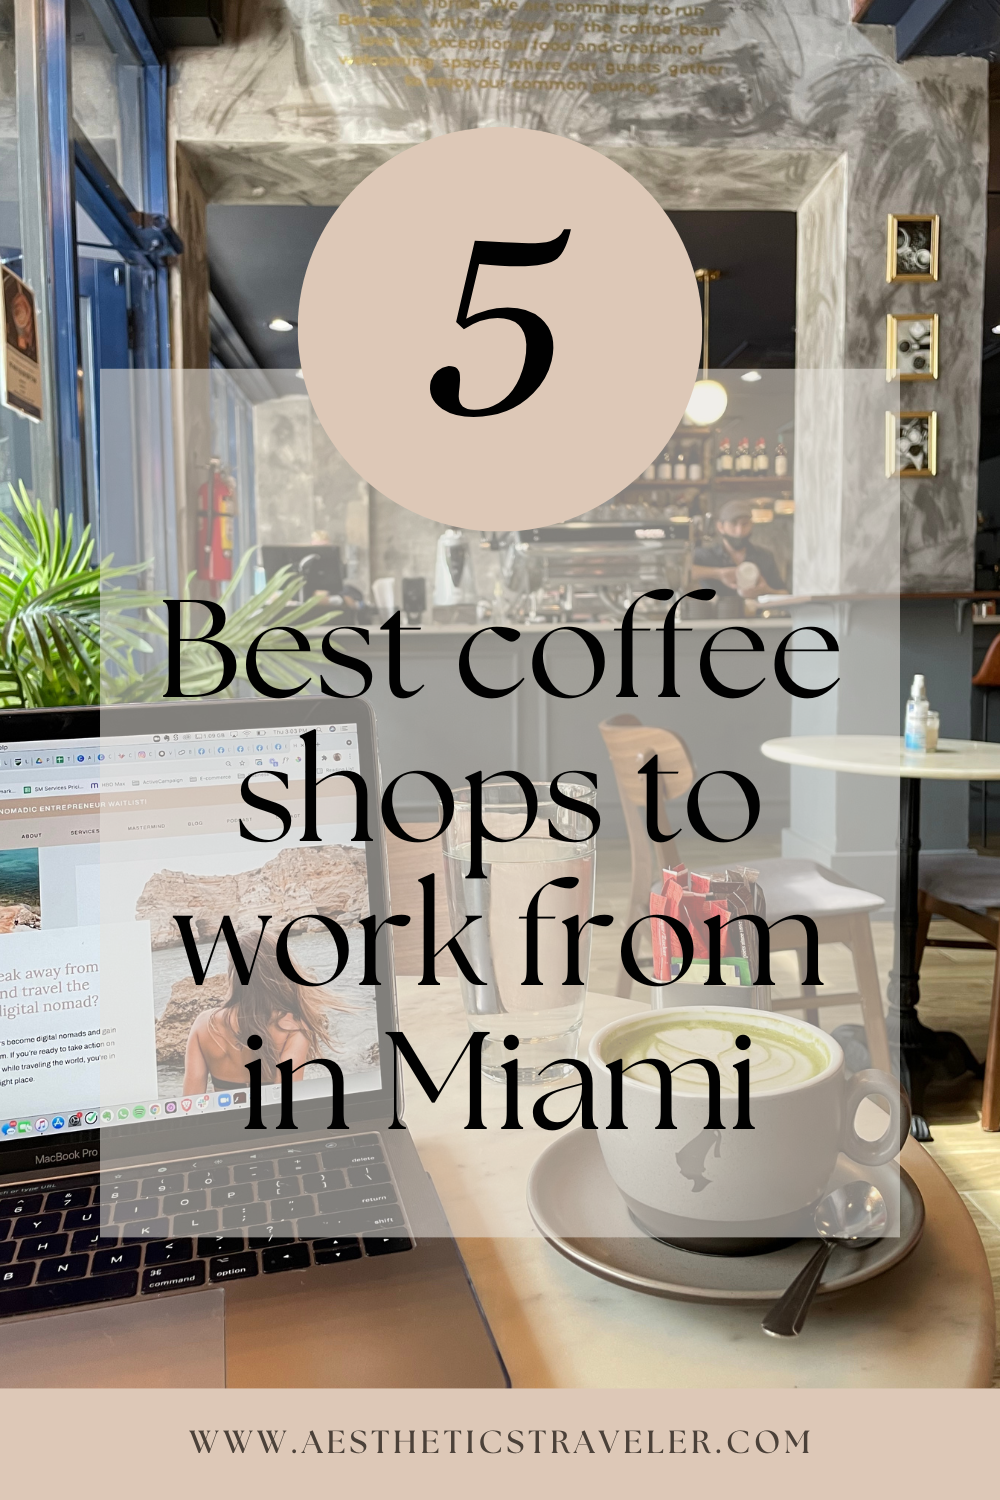 The Best Coffee Shops To Work From In Miami | aestheticstraveler.com luxury travel and design blog | IG: @itskarenalexandra